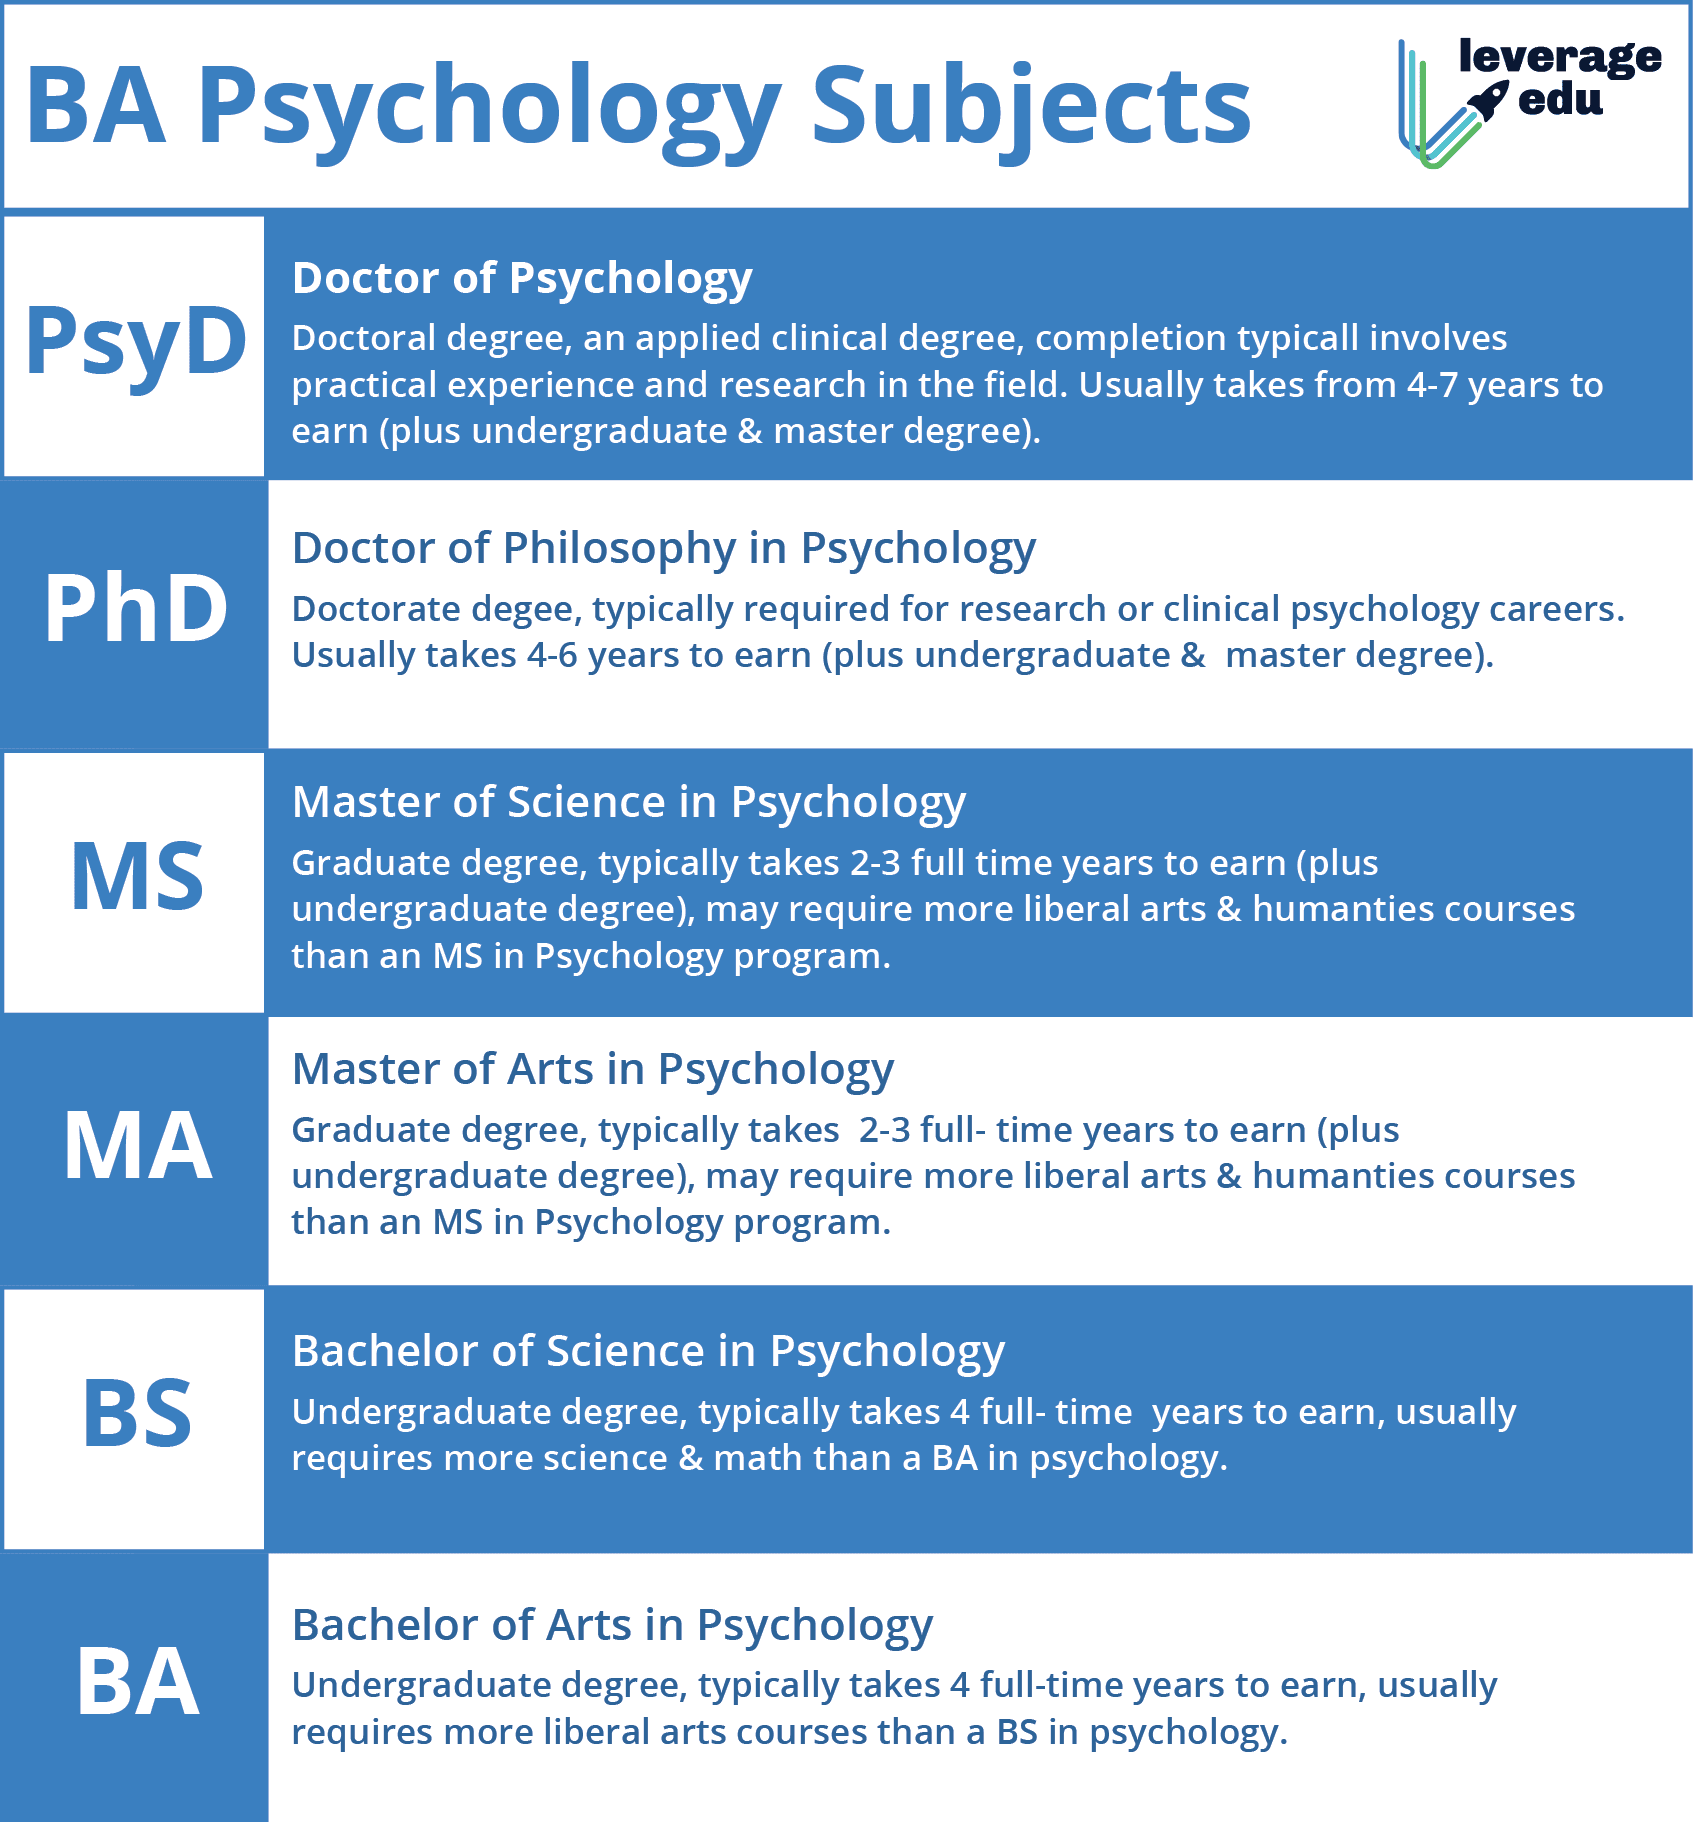 BA Psychology Subjects